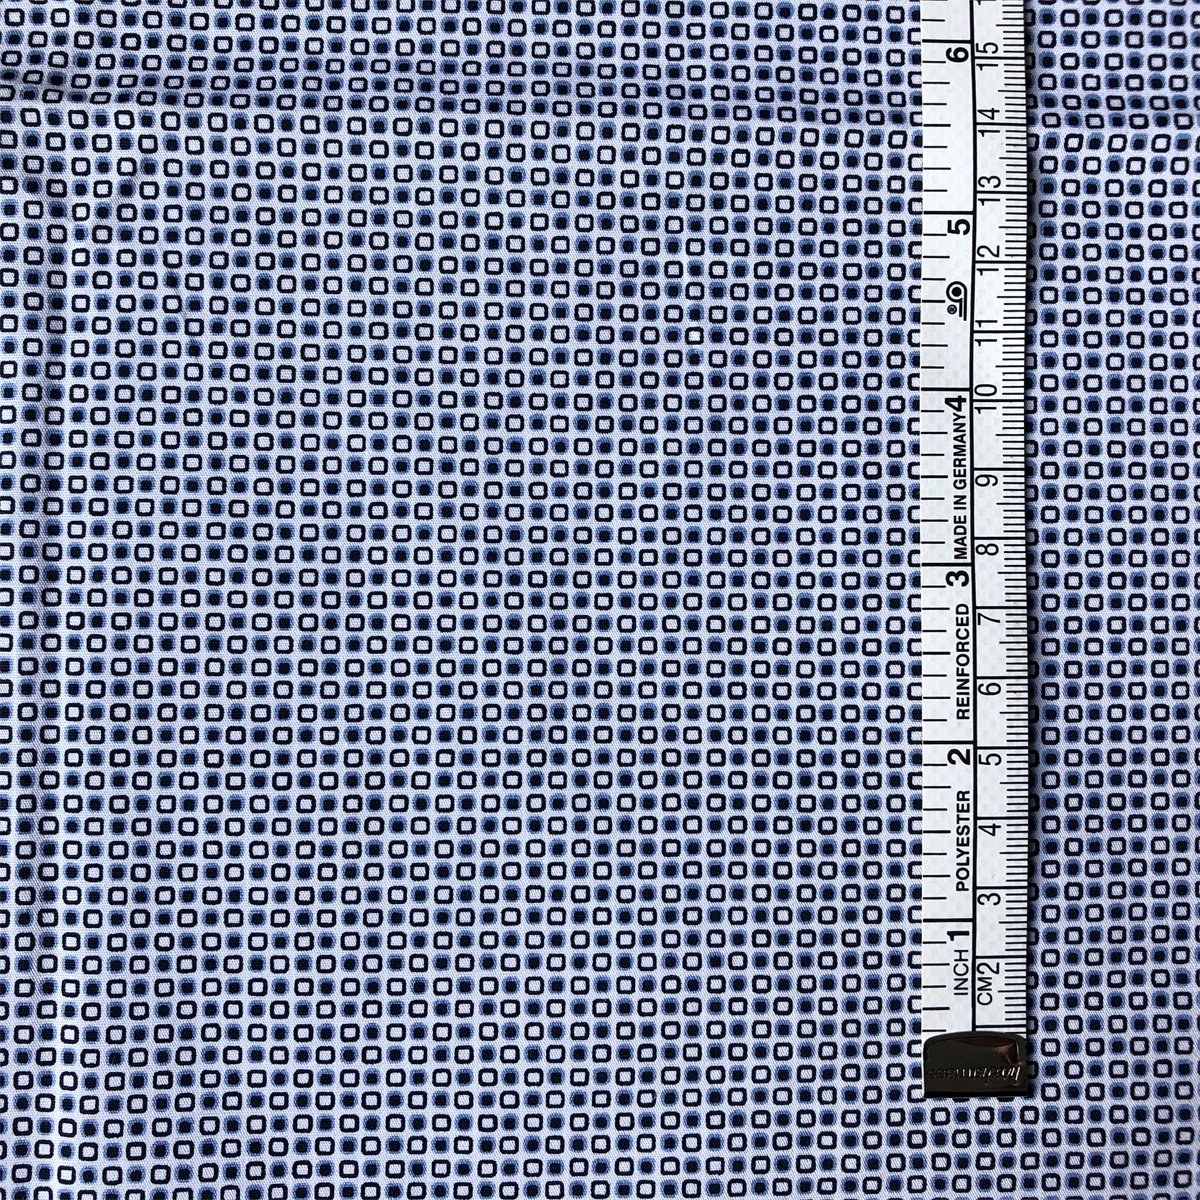 Sun-rising Textile Cotton Printed fabric 40S compact yarn men's casual shirts 100% cotton poplin printed shirts woven fabric